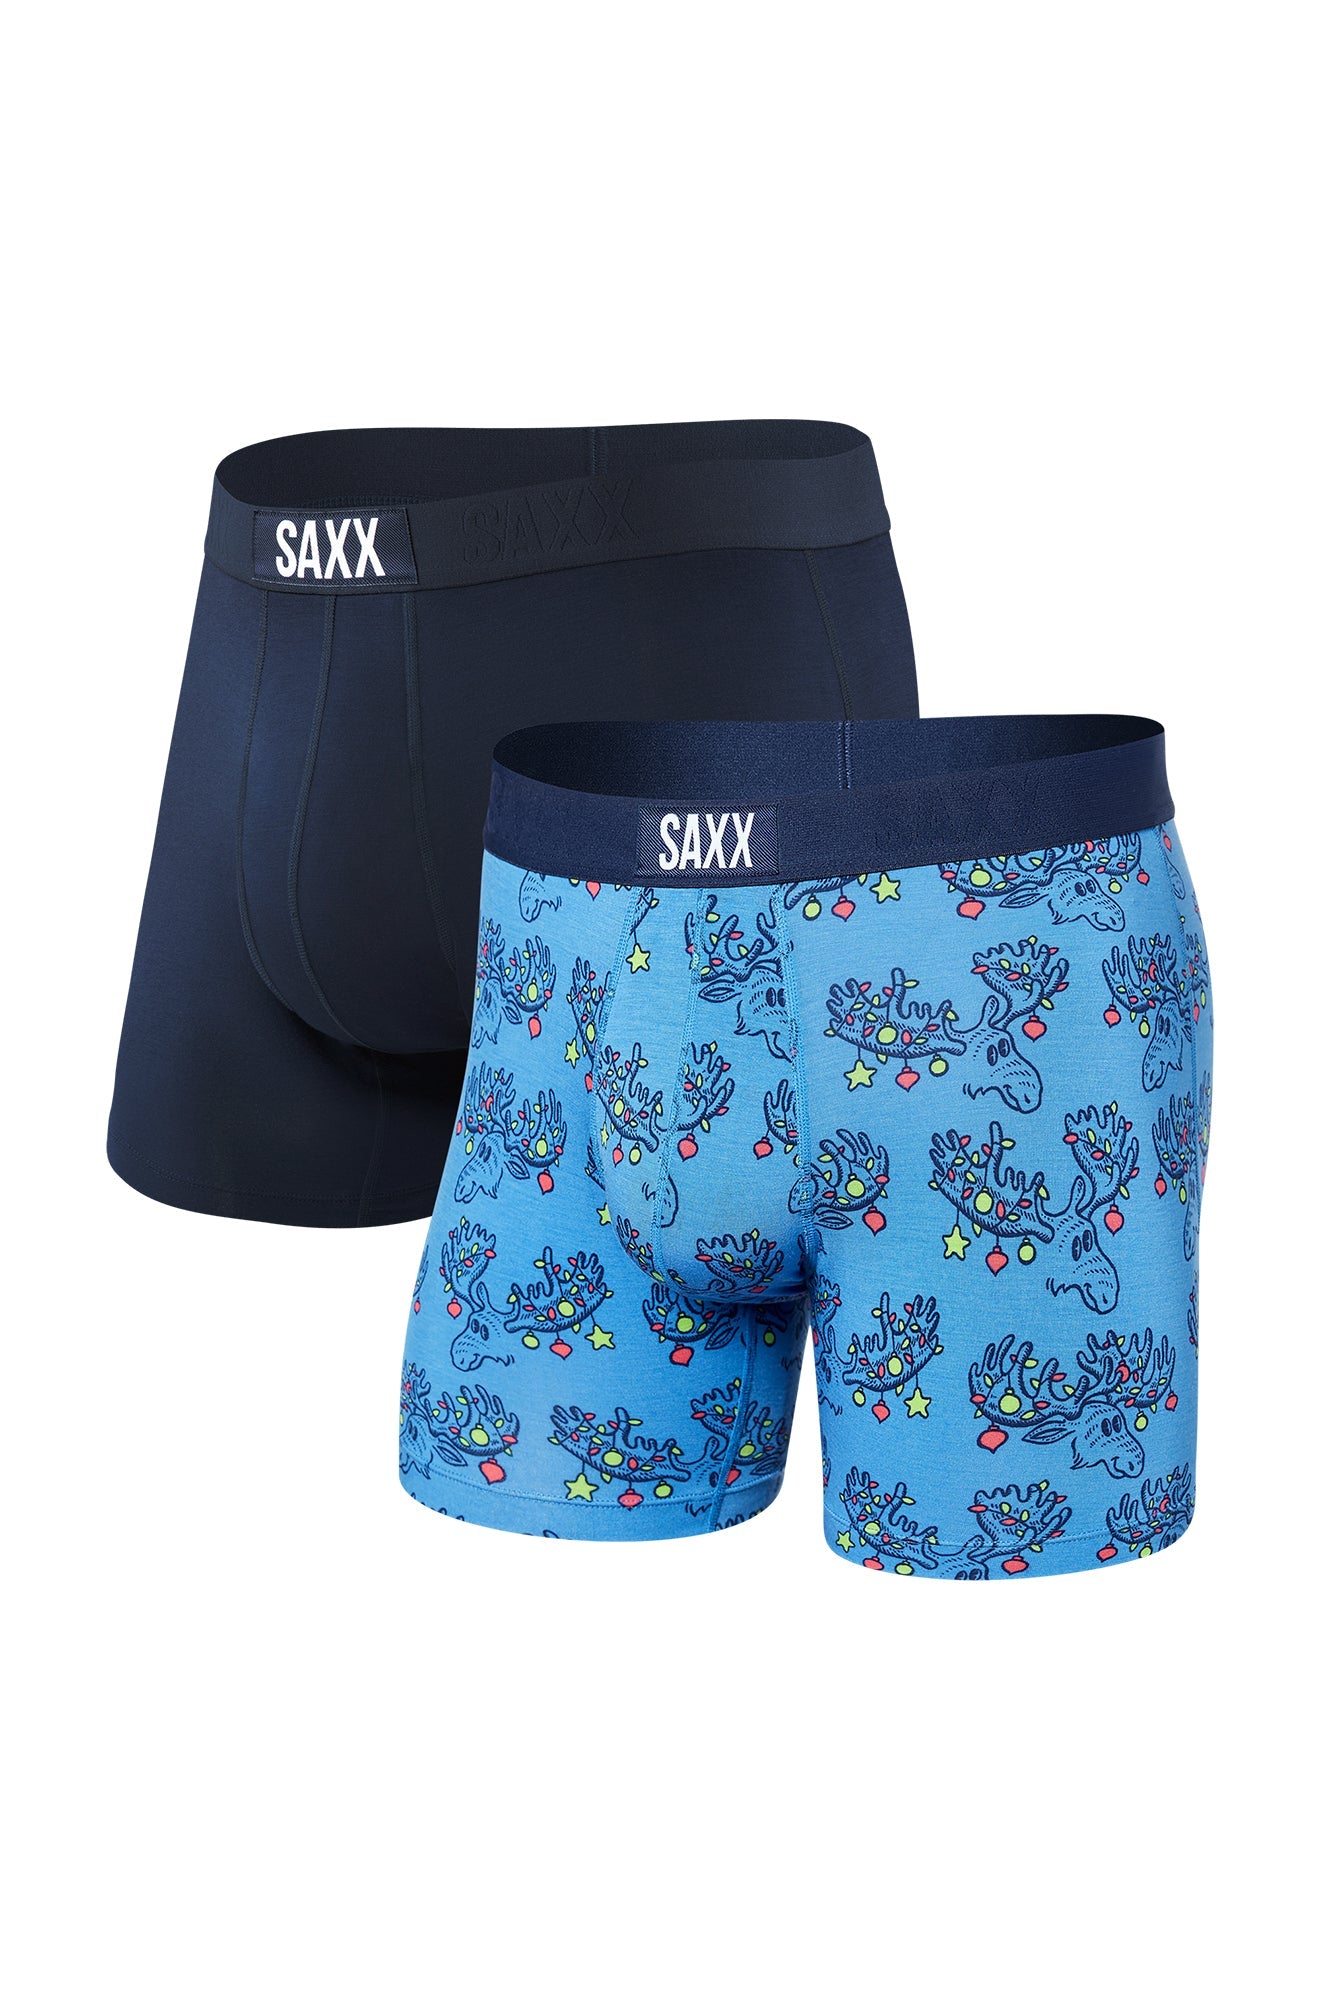 Men's underwear/boxer by Saxx, SXPP2V MON